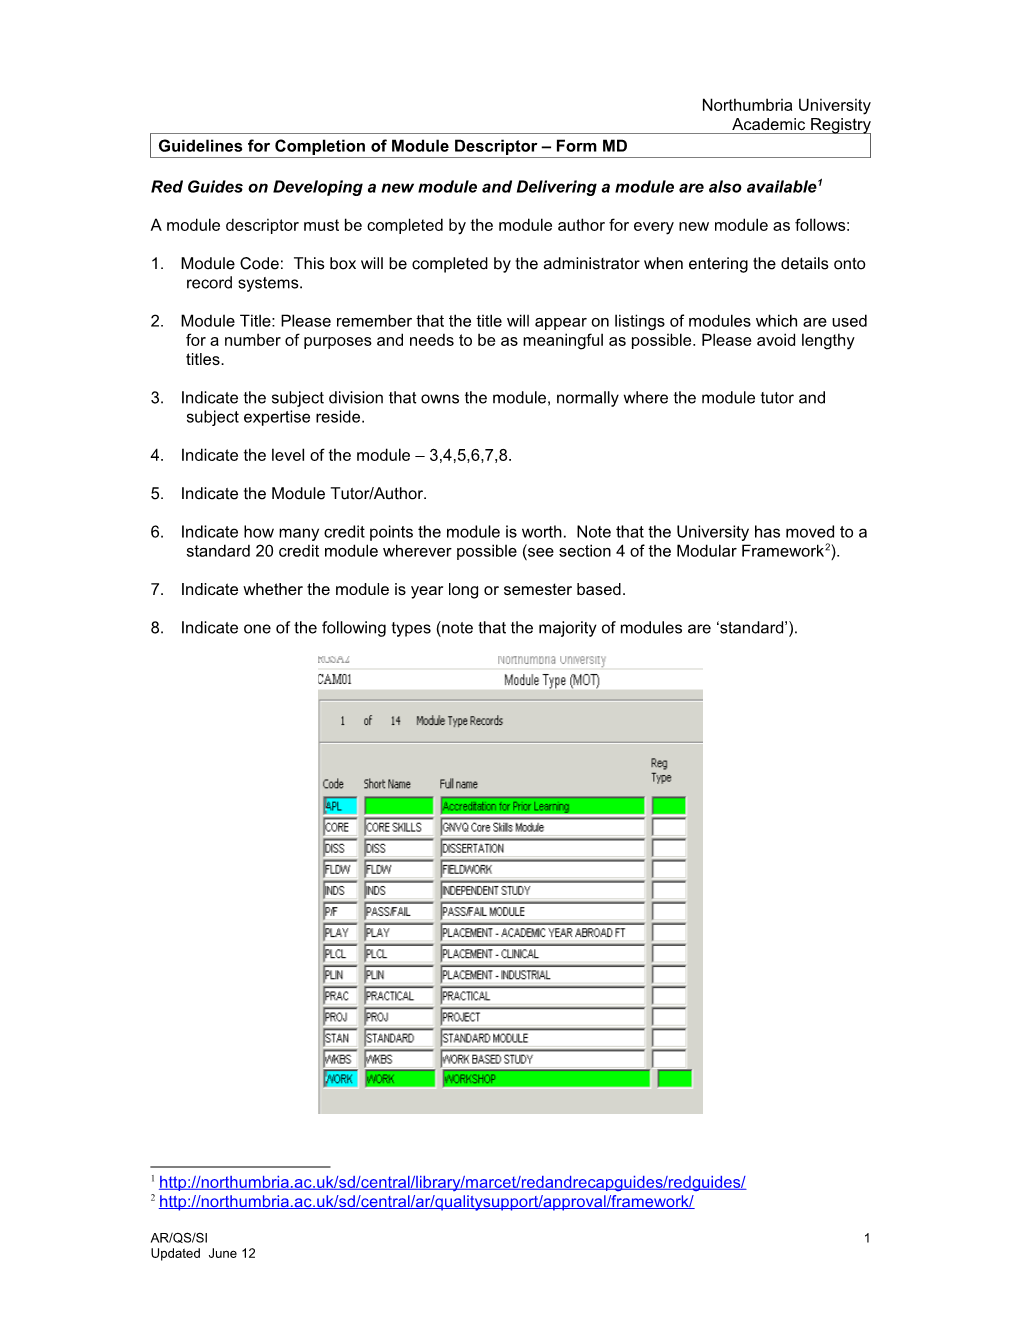 Guidelines for Completion of Module Descriptor Form MD